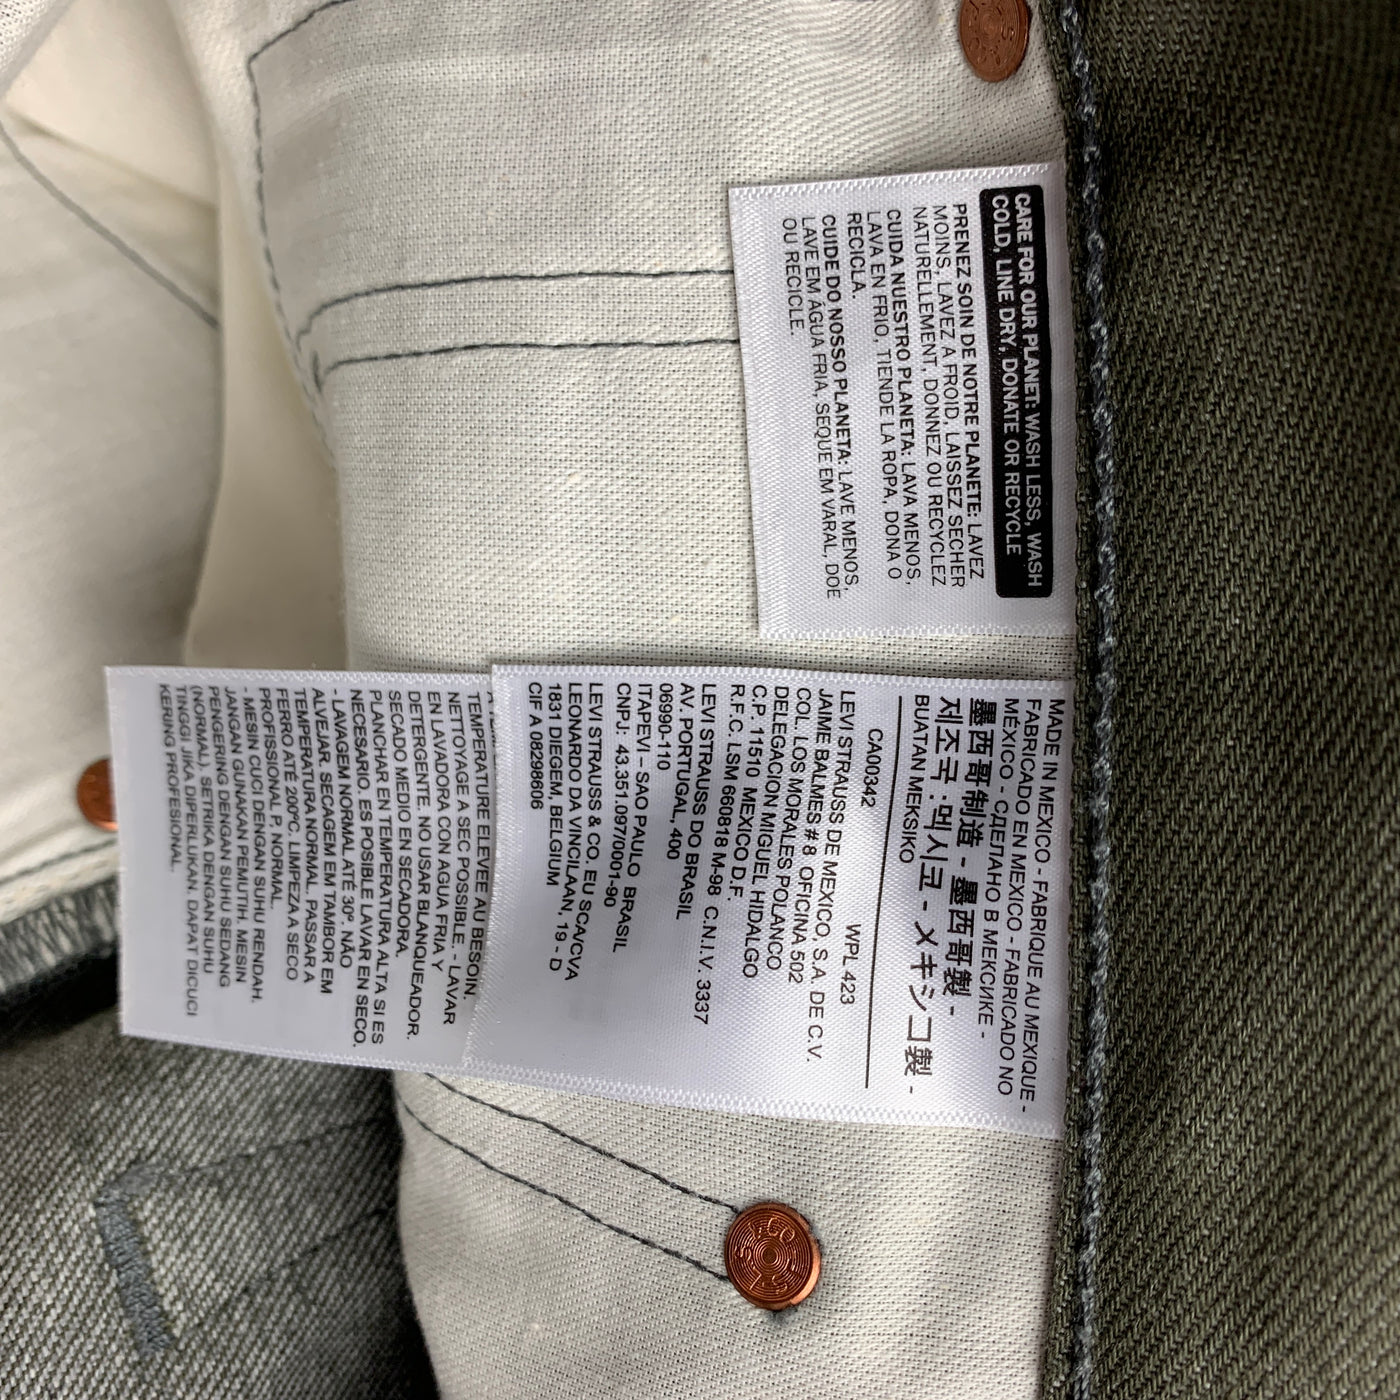 LEVI'S 501 Size 32 Olive White Oak Cone Denim Button Fly Jeans